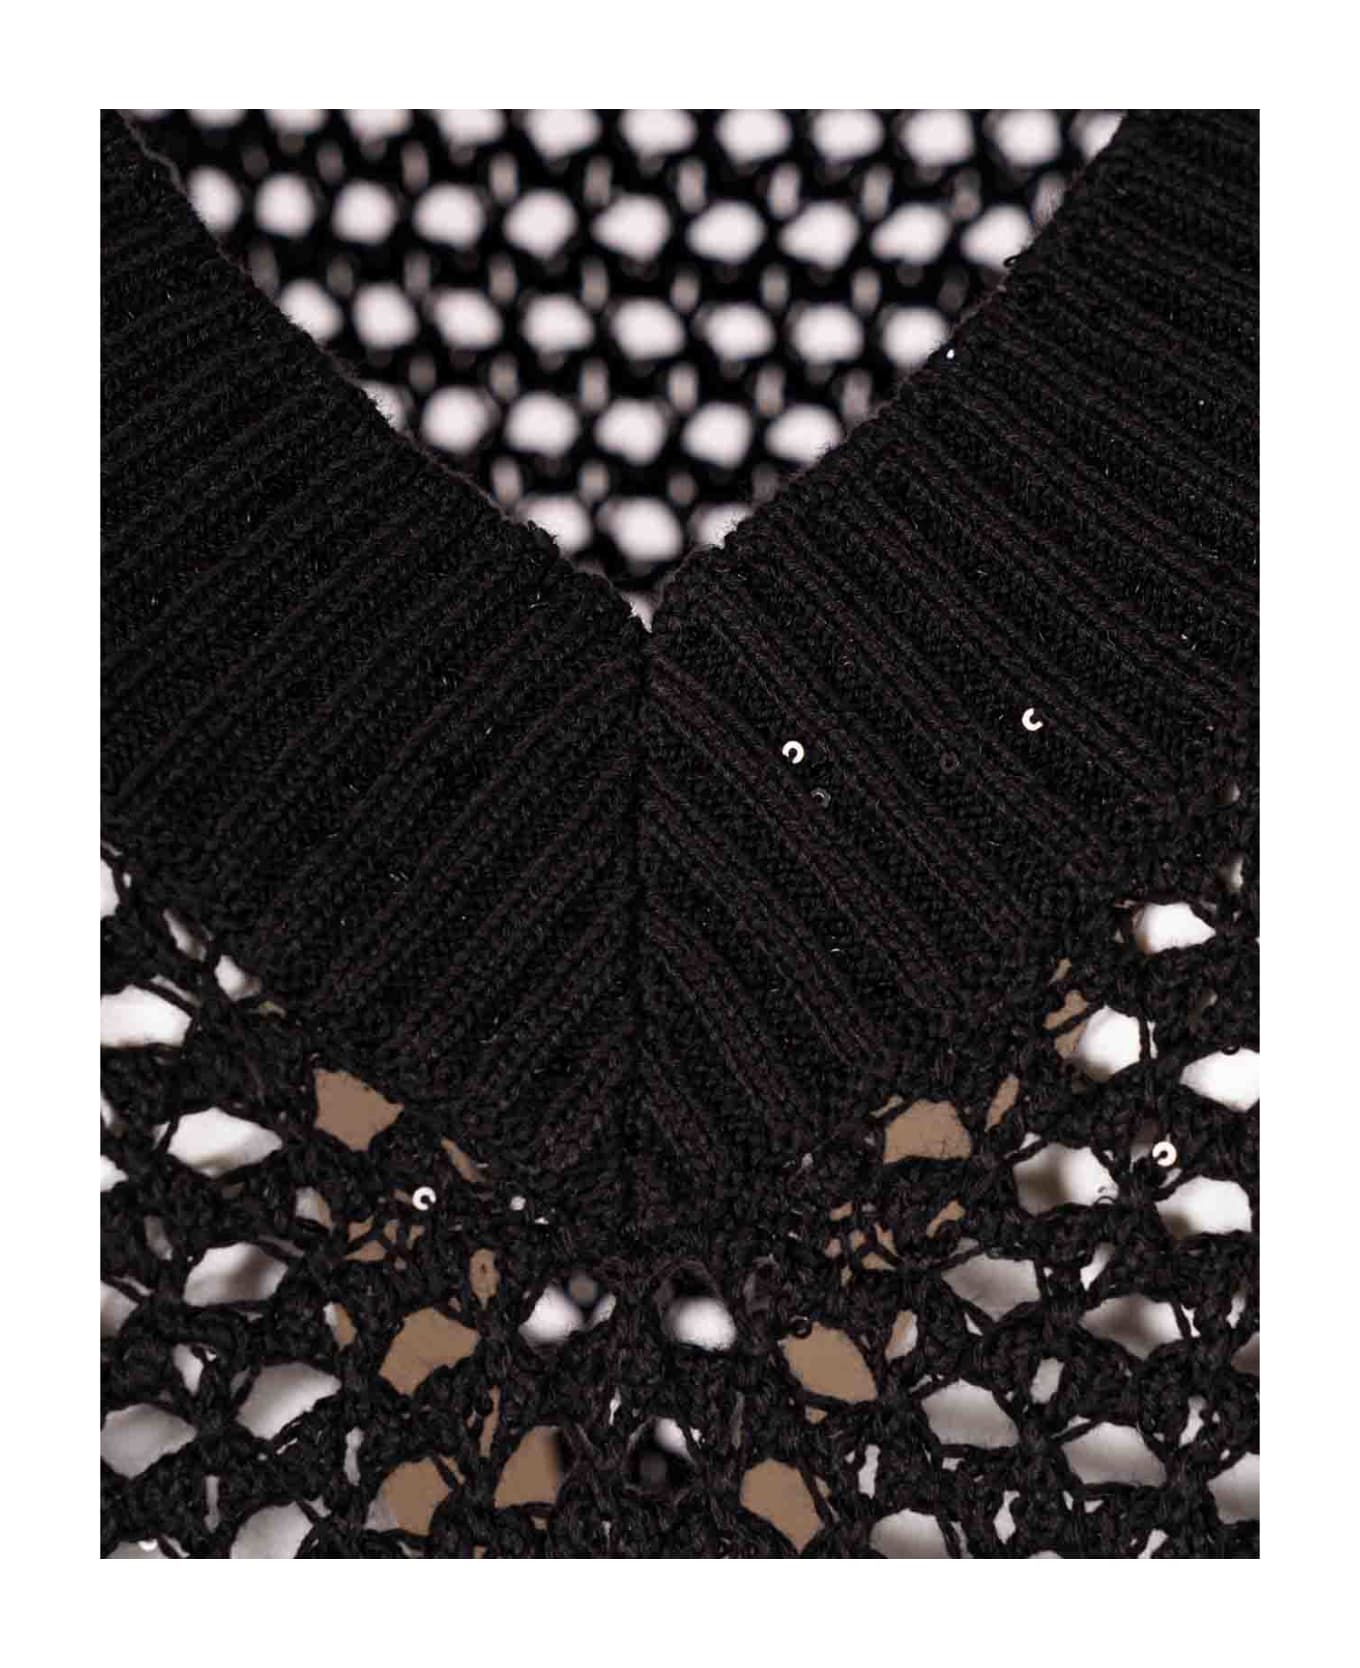 Brunello Cucinelli Sweaters Black - Black